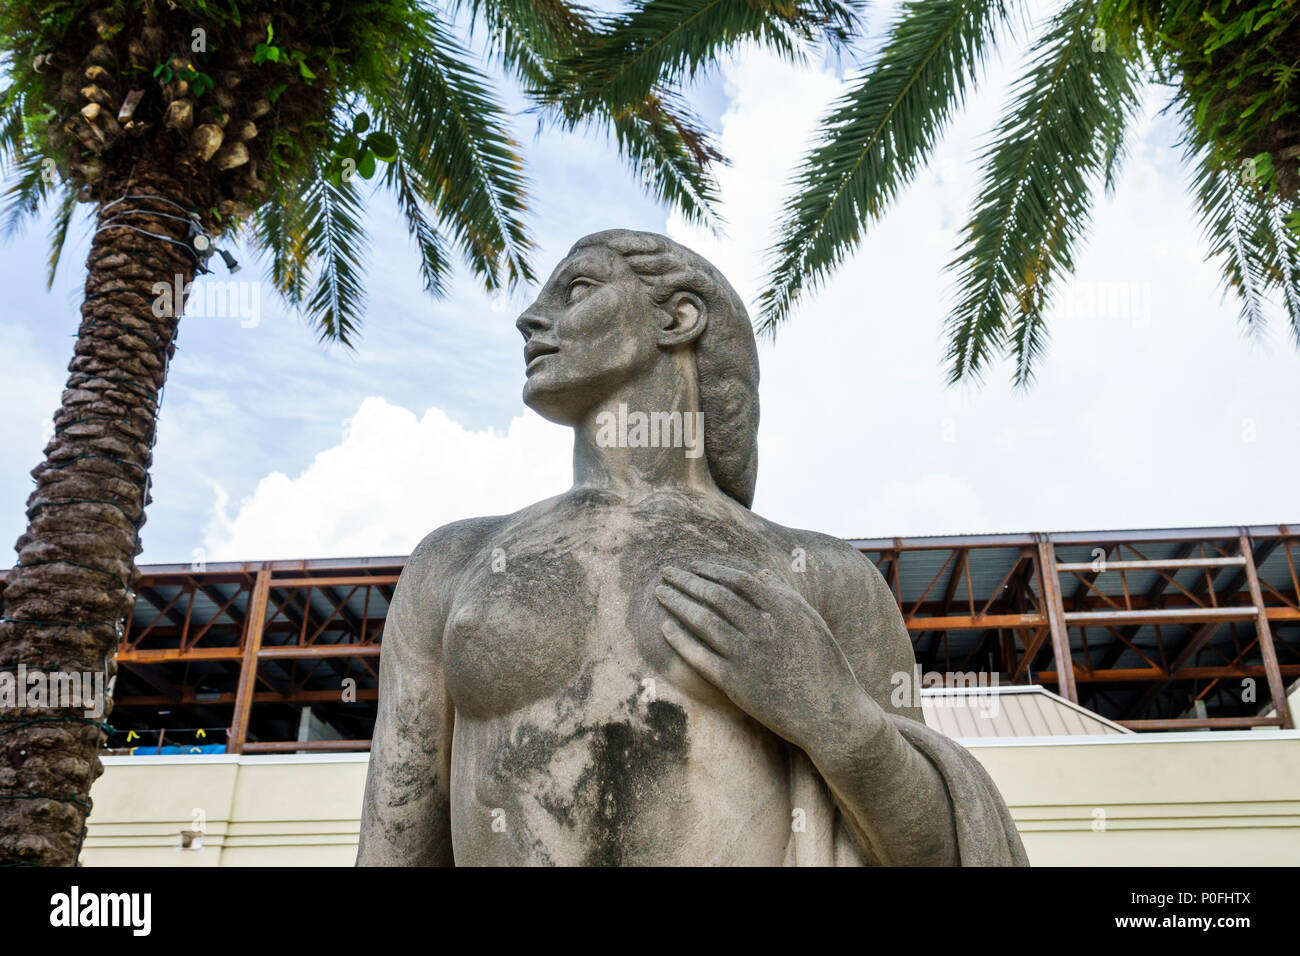 Palm Beach Florida,Norton Gallery of Art,museum,central garden,sculpture,Wheeler Williams,Fountain of palm trees,FL170725013 Stock Photo